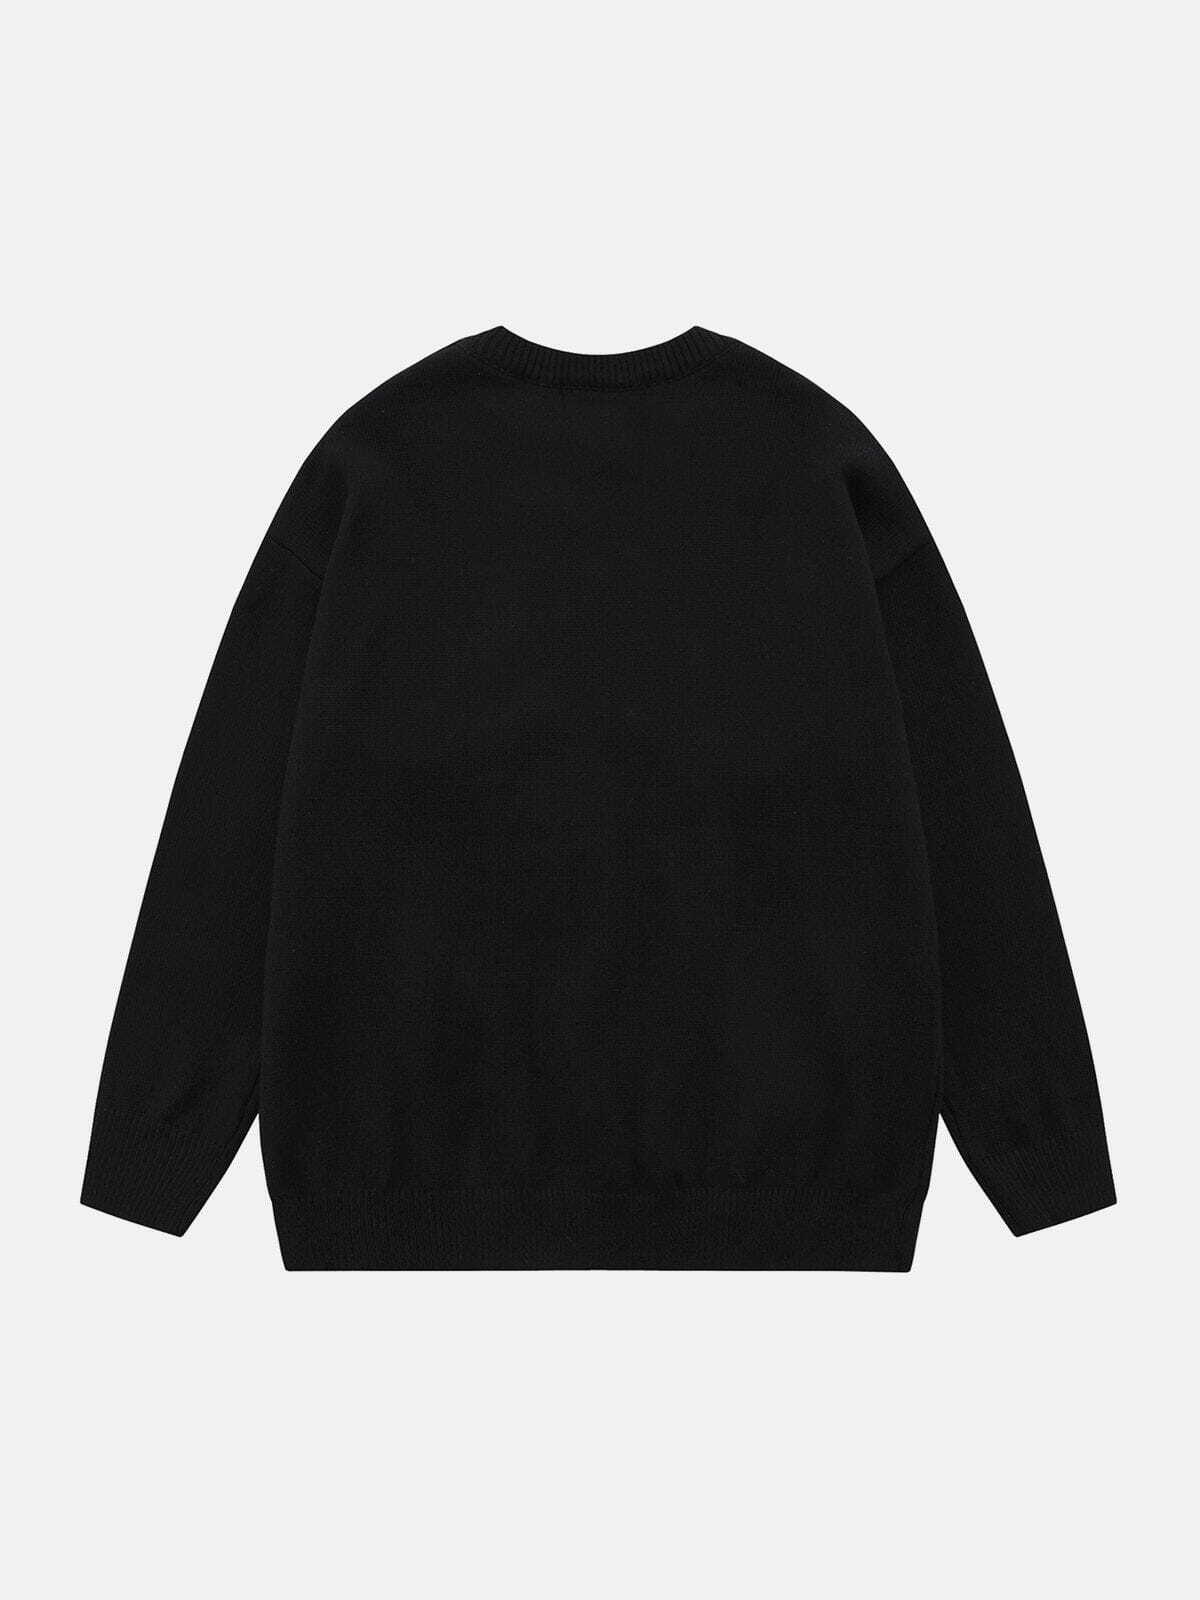 flocked ghost sweater edgy y2k streetwear charm 3168